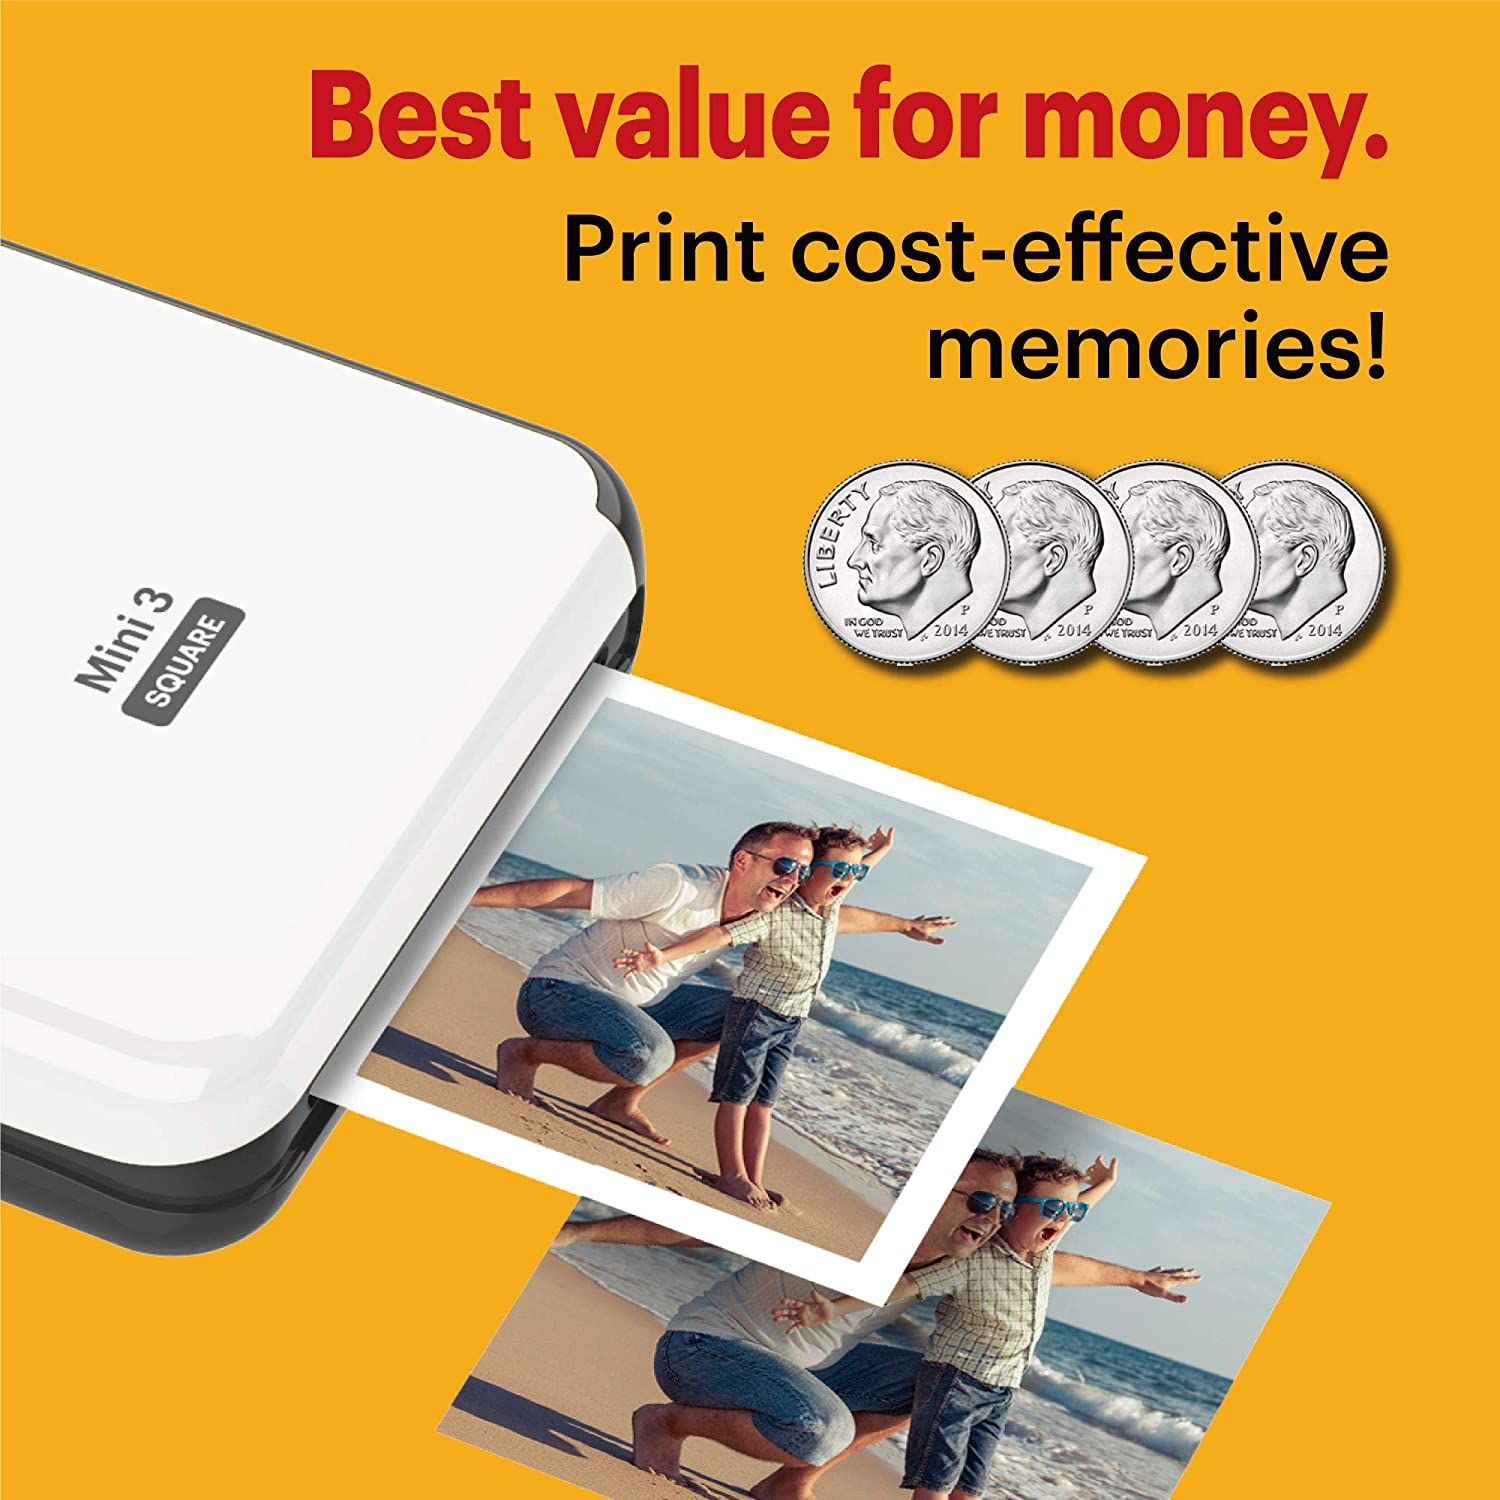 Kodak All-New Mini 3 Square Instagram Size Bluetooth Portable Photo Printer  3x3